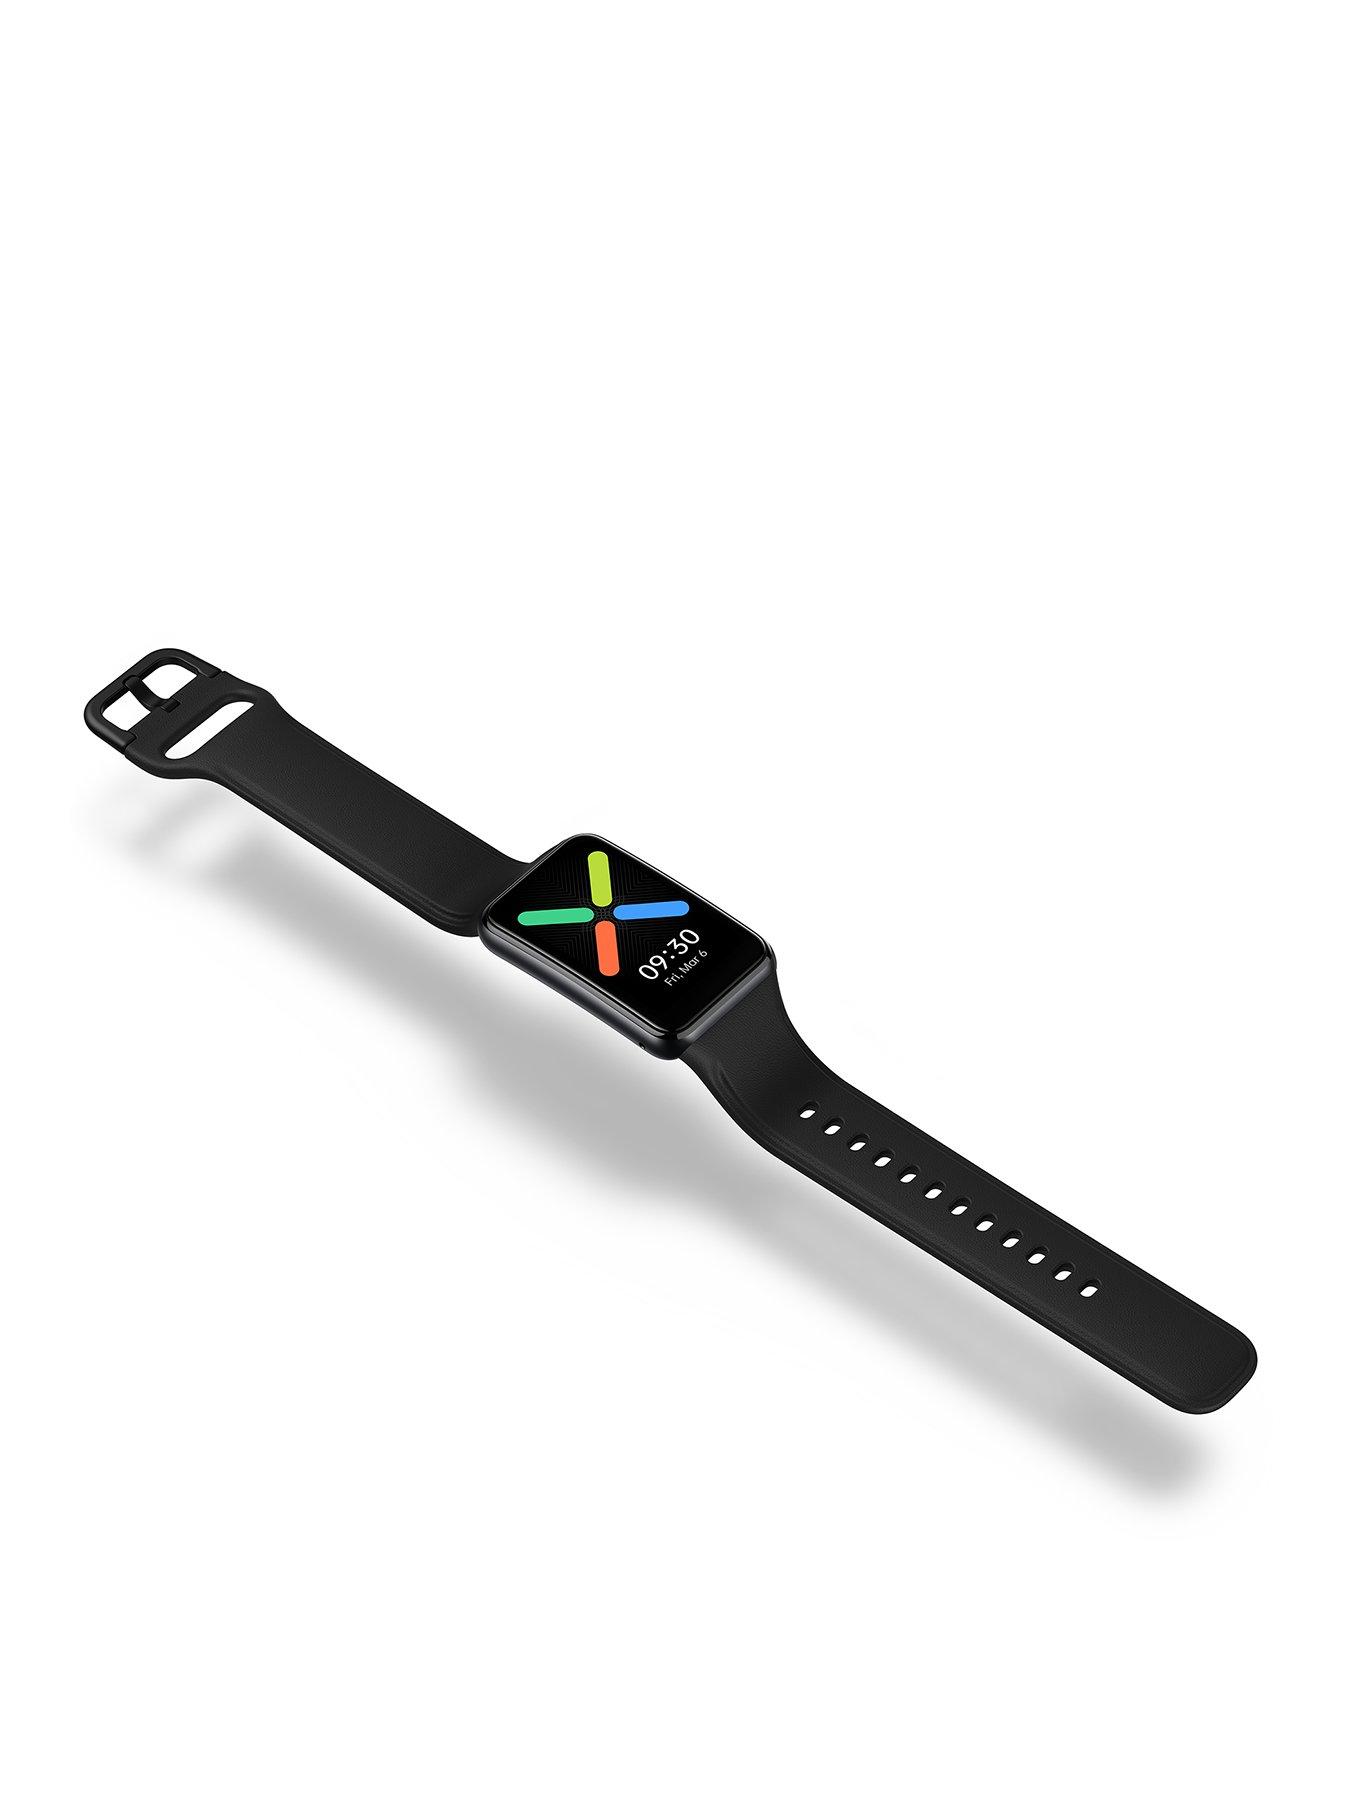 OPPO Watch Free Smartwatch (Black Strap, Free Size) 